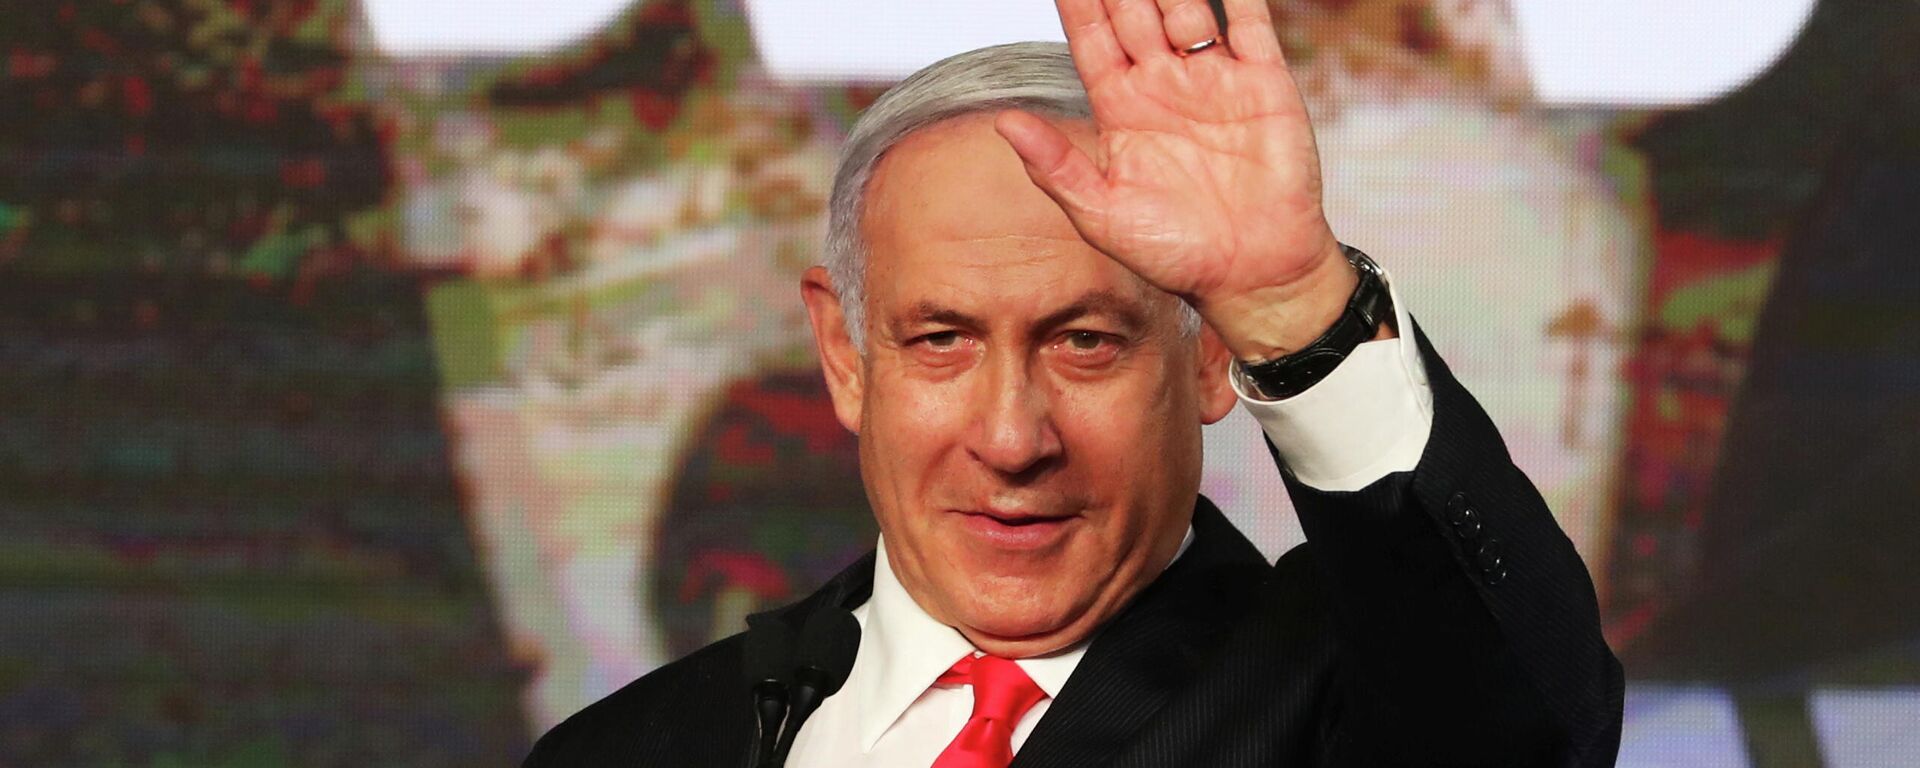 Benjamín Netanyahu, primer ministro israelí - Sputnik Mundo, 1920, 18.04.2021